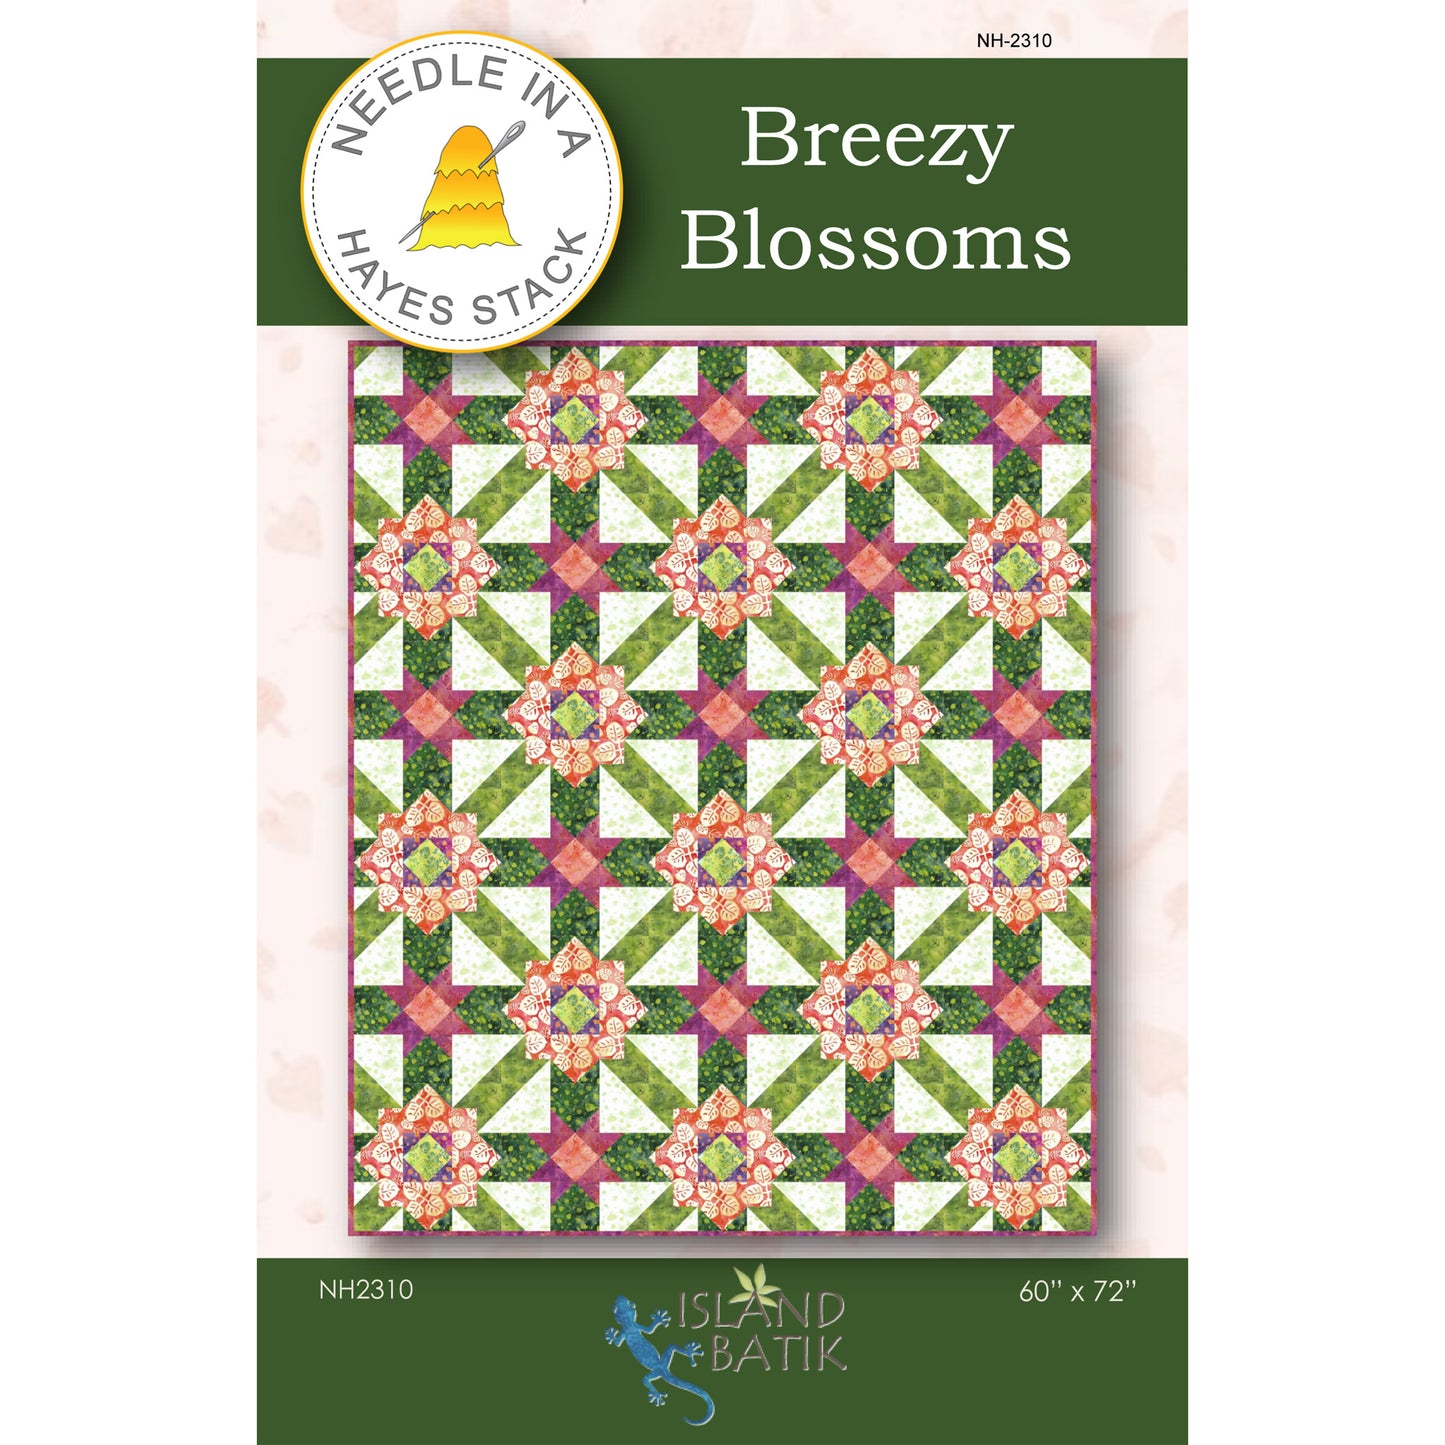 Breezy Blossoms Quilt NH-2310e - Downloadable Pattern